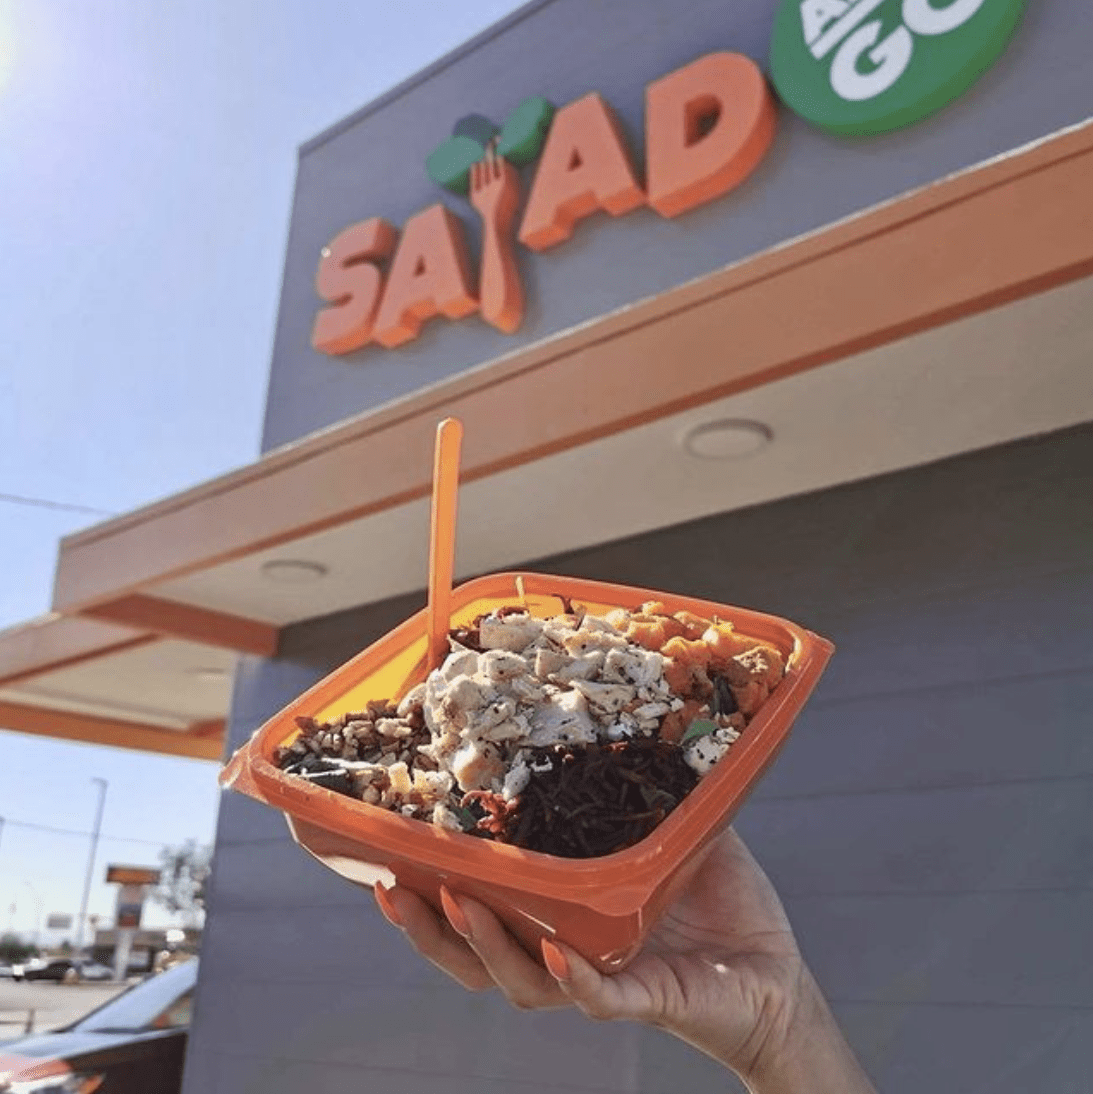 Salad and Go (@saladandgo) • Instagram photos and videos